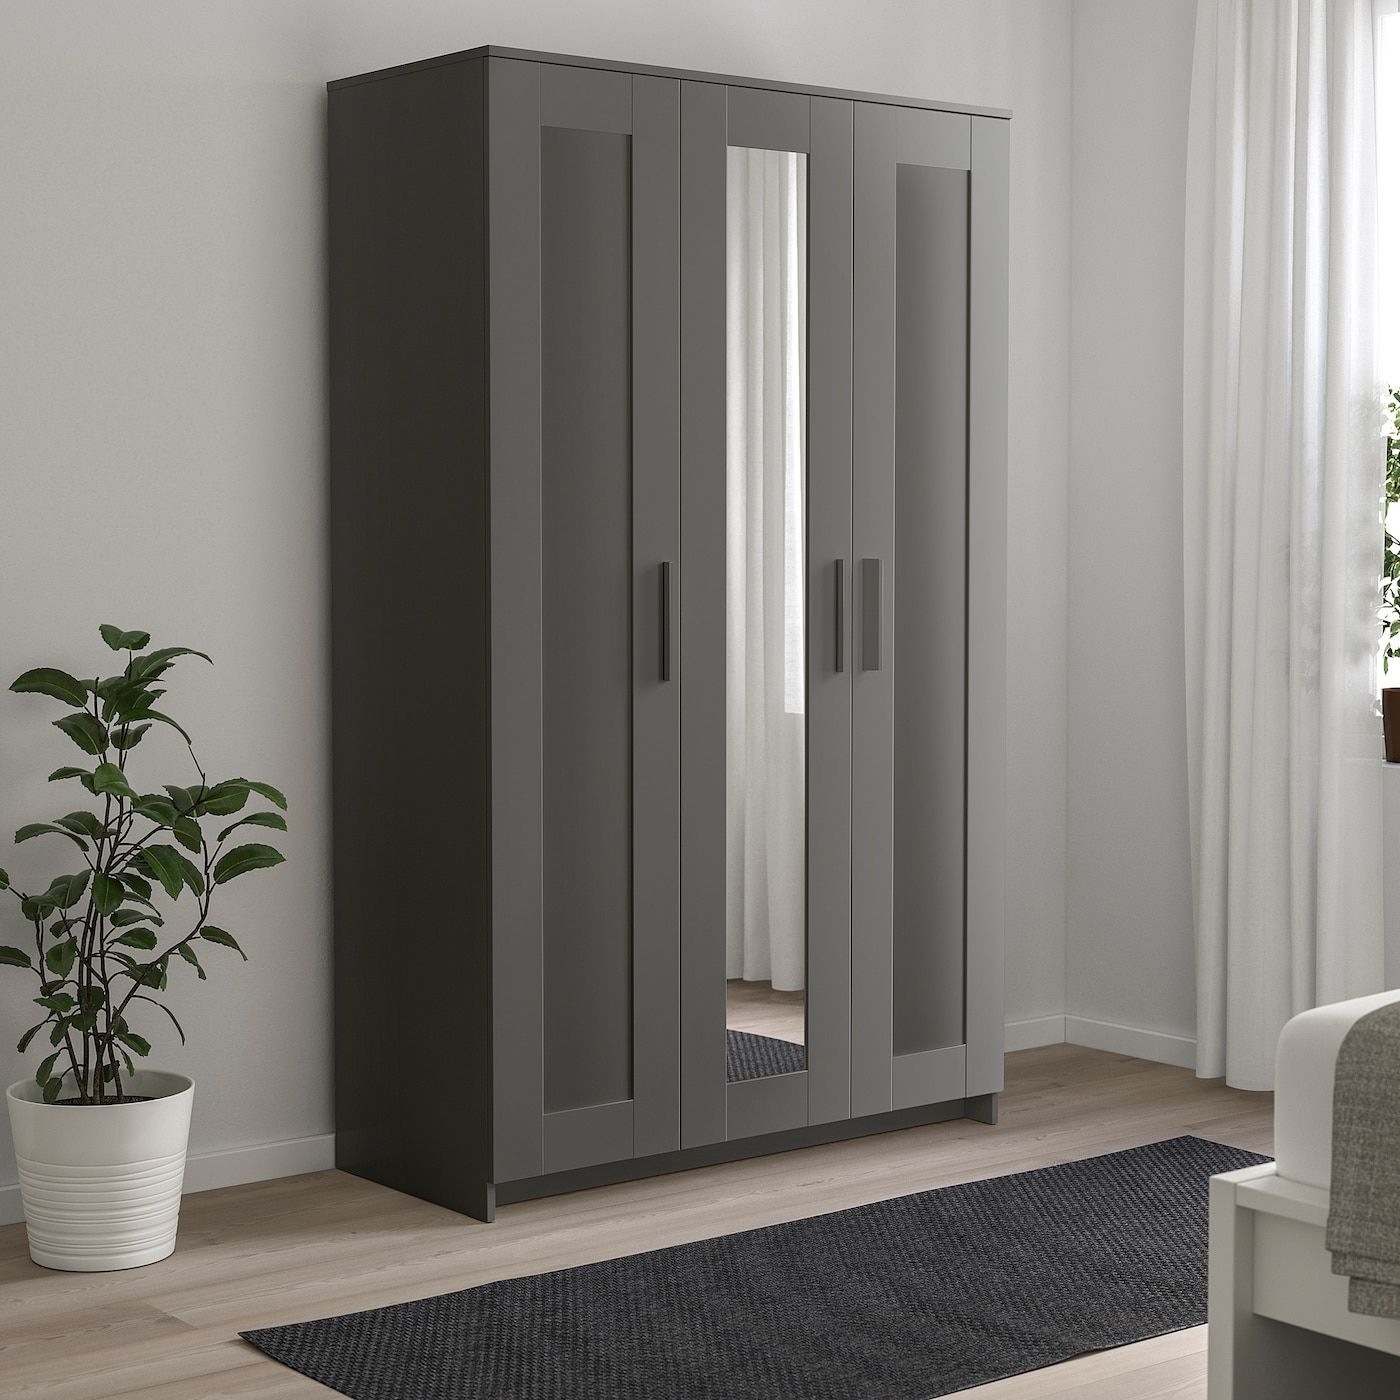 Brimnes Wardrobe With 3 Doors, Gray, 46 1/8x74 3/4" – Ikea With Regard To Three Door Wardrobes With Mirror (View 8 of 20)